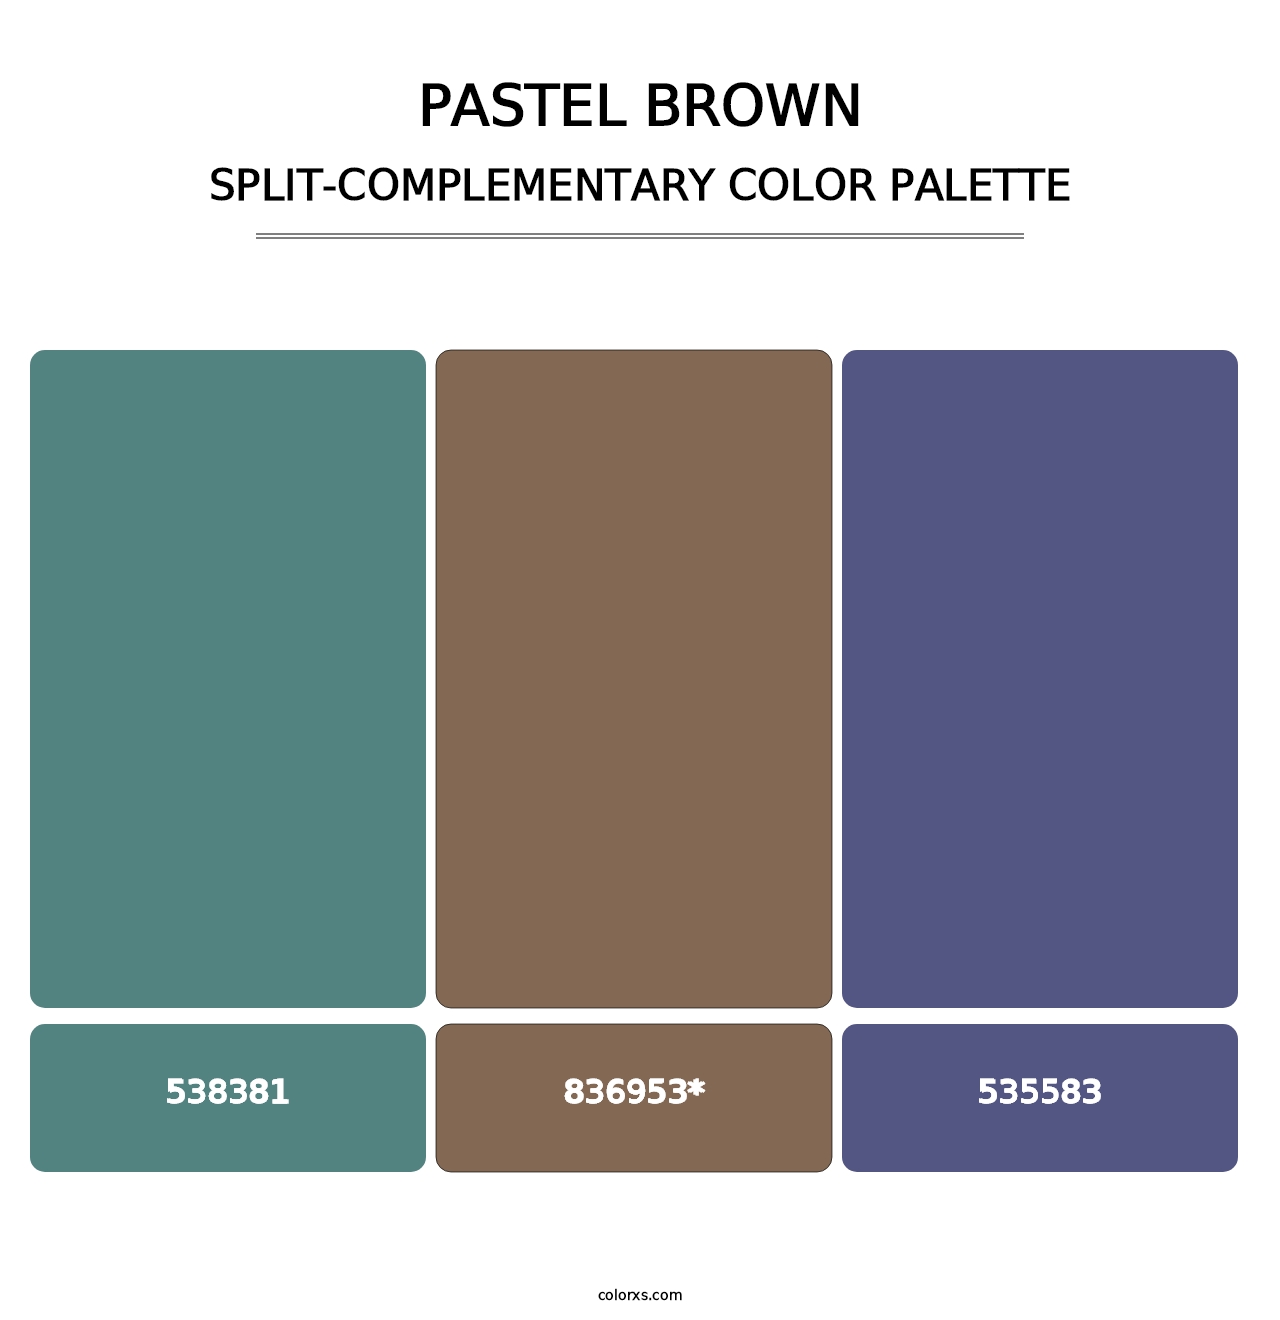 Pastel Brown - Split-Complementary Color Palette